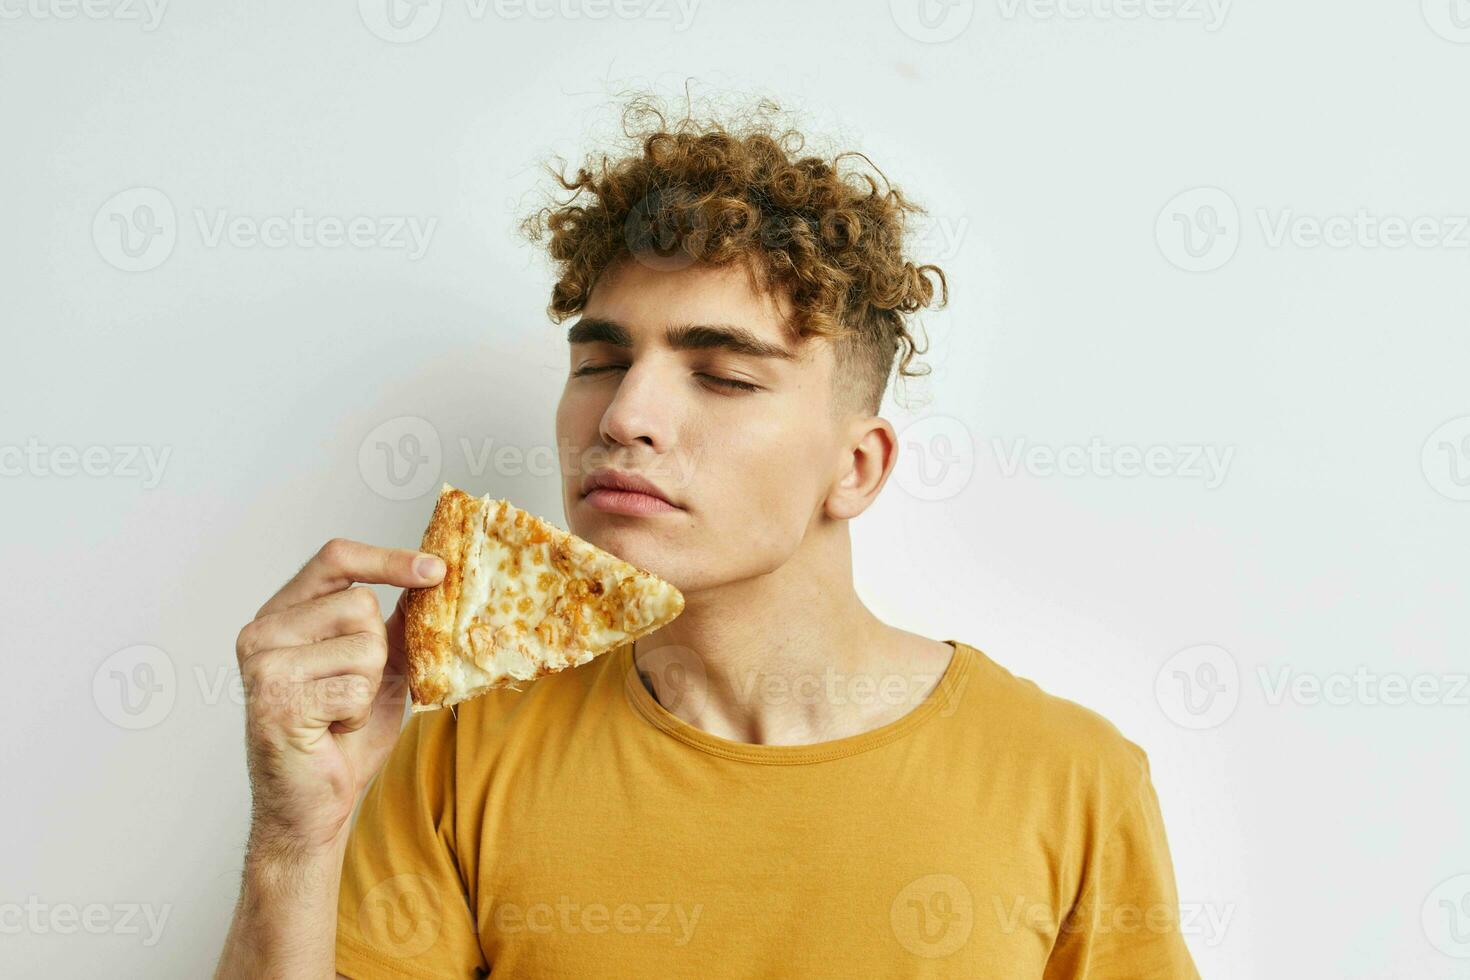 kinky guy eating pizza posing close-up isolated background photo